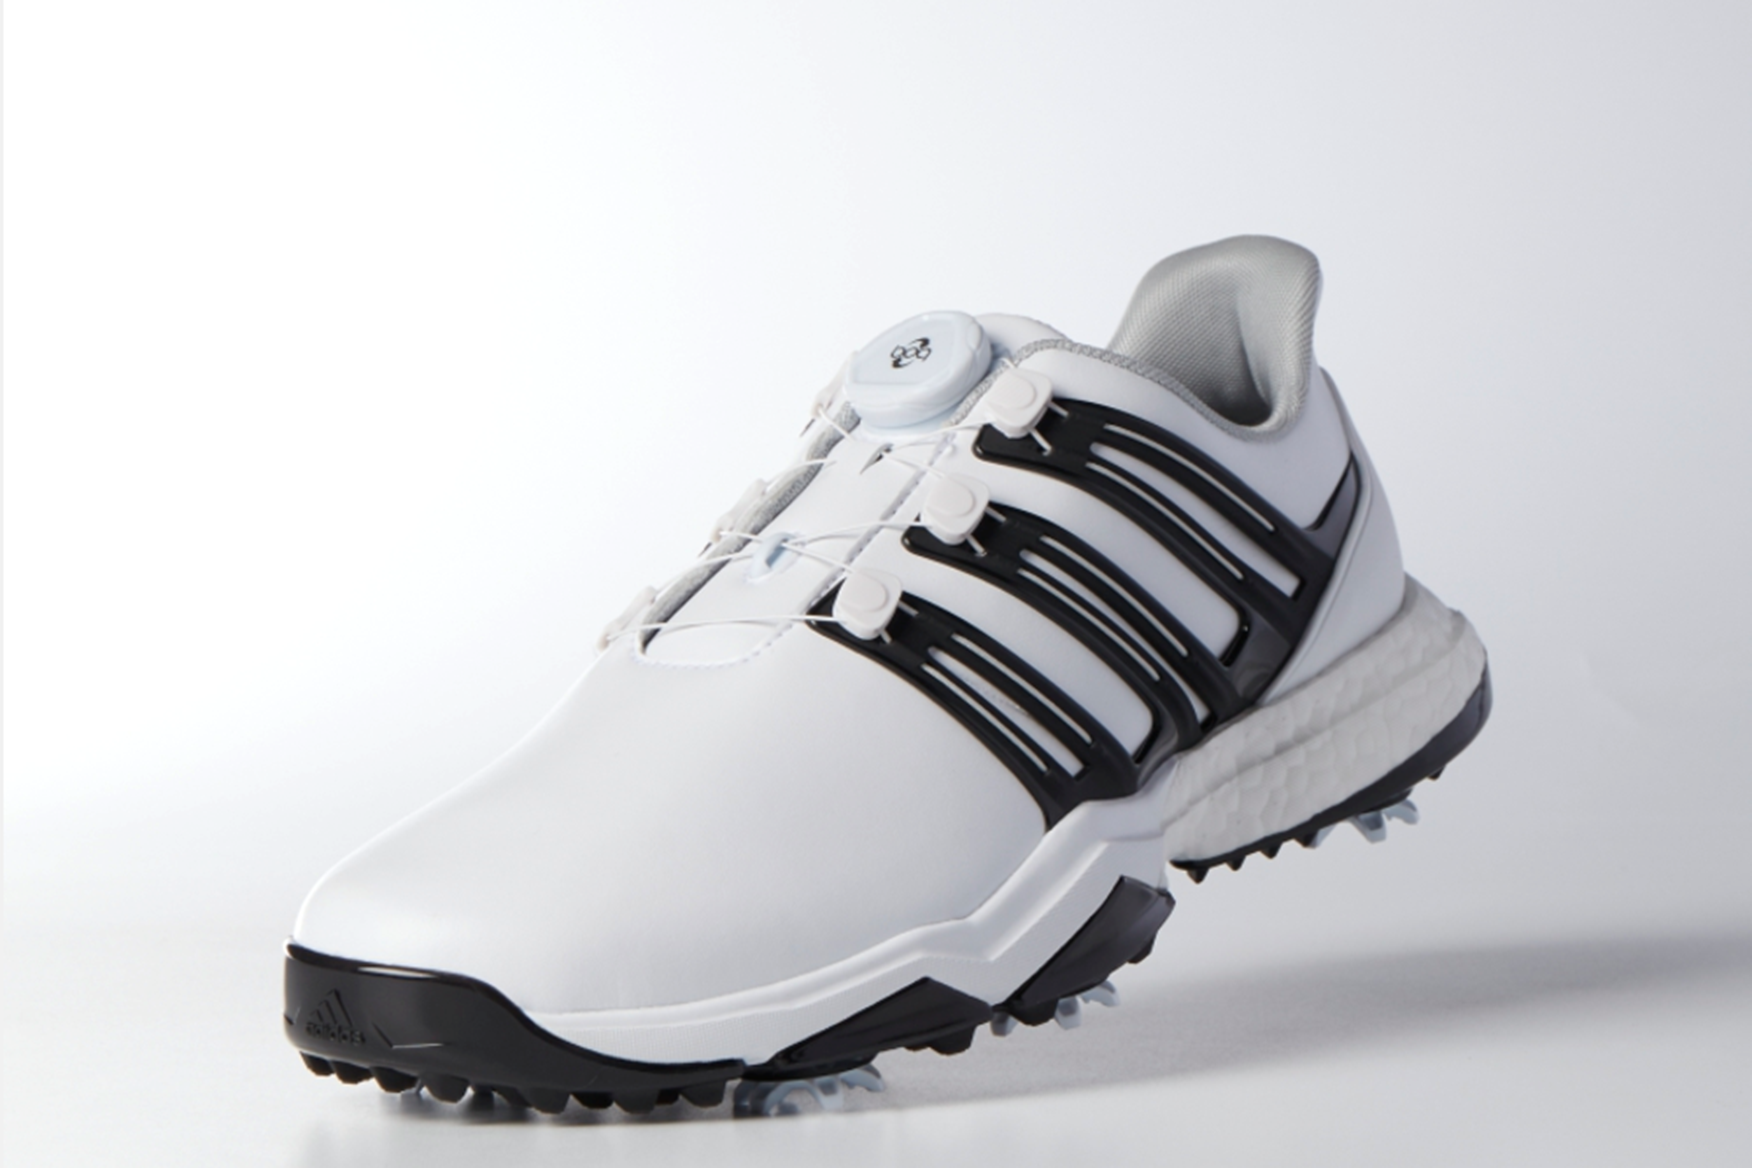 adidas climacool golf shoes reviews